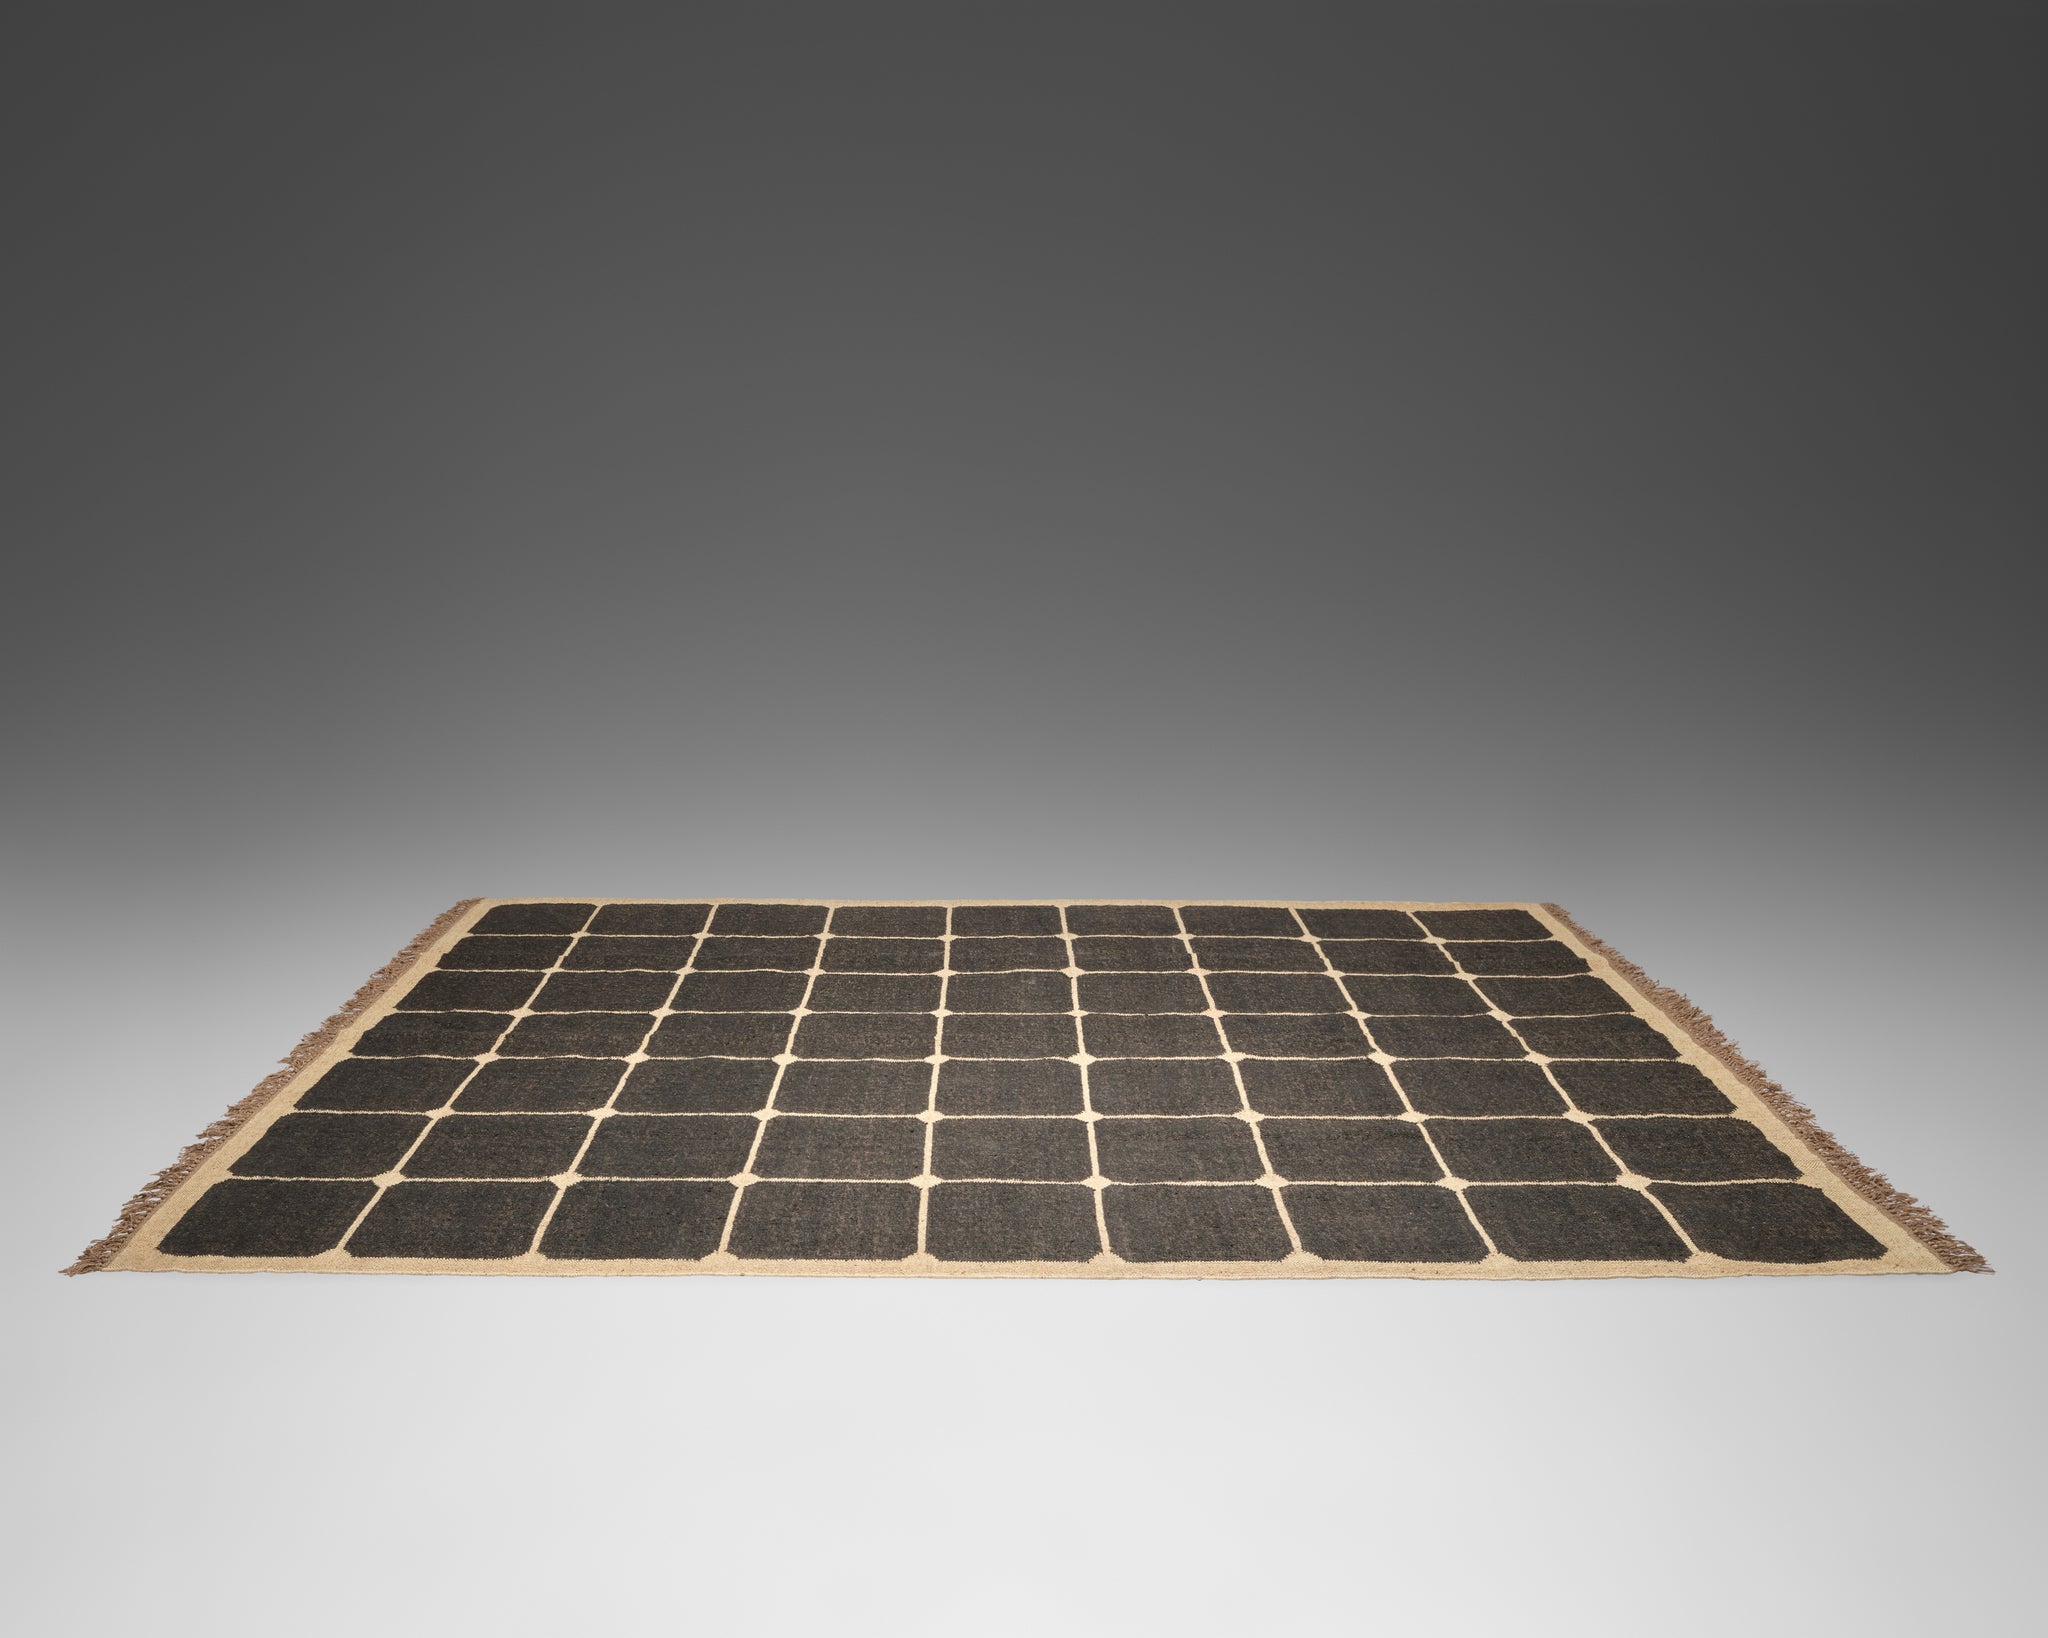 The Forsyth Checkerboard Rug - Dark Tile Checks in Off Black